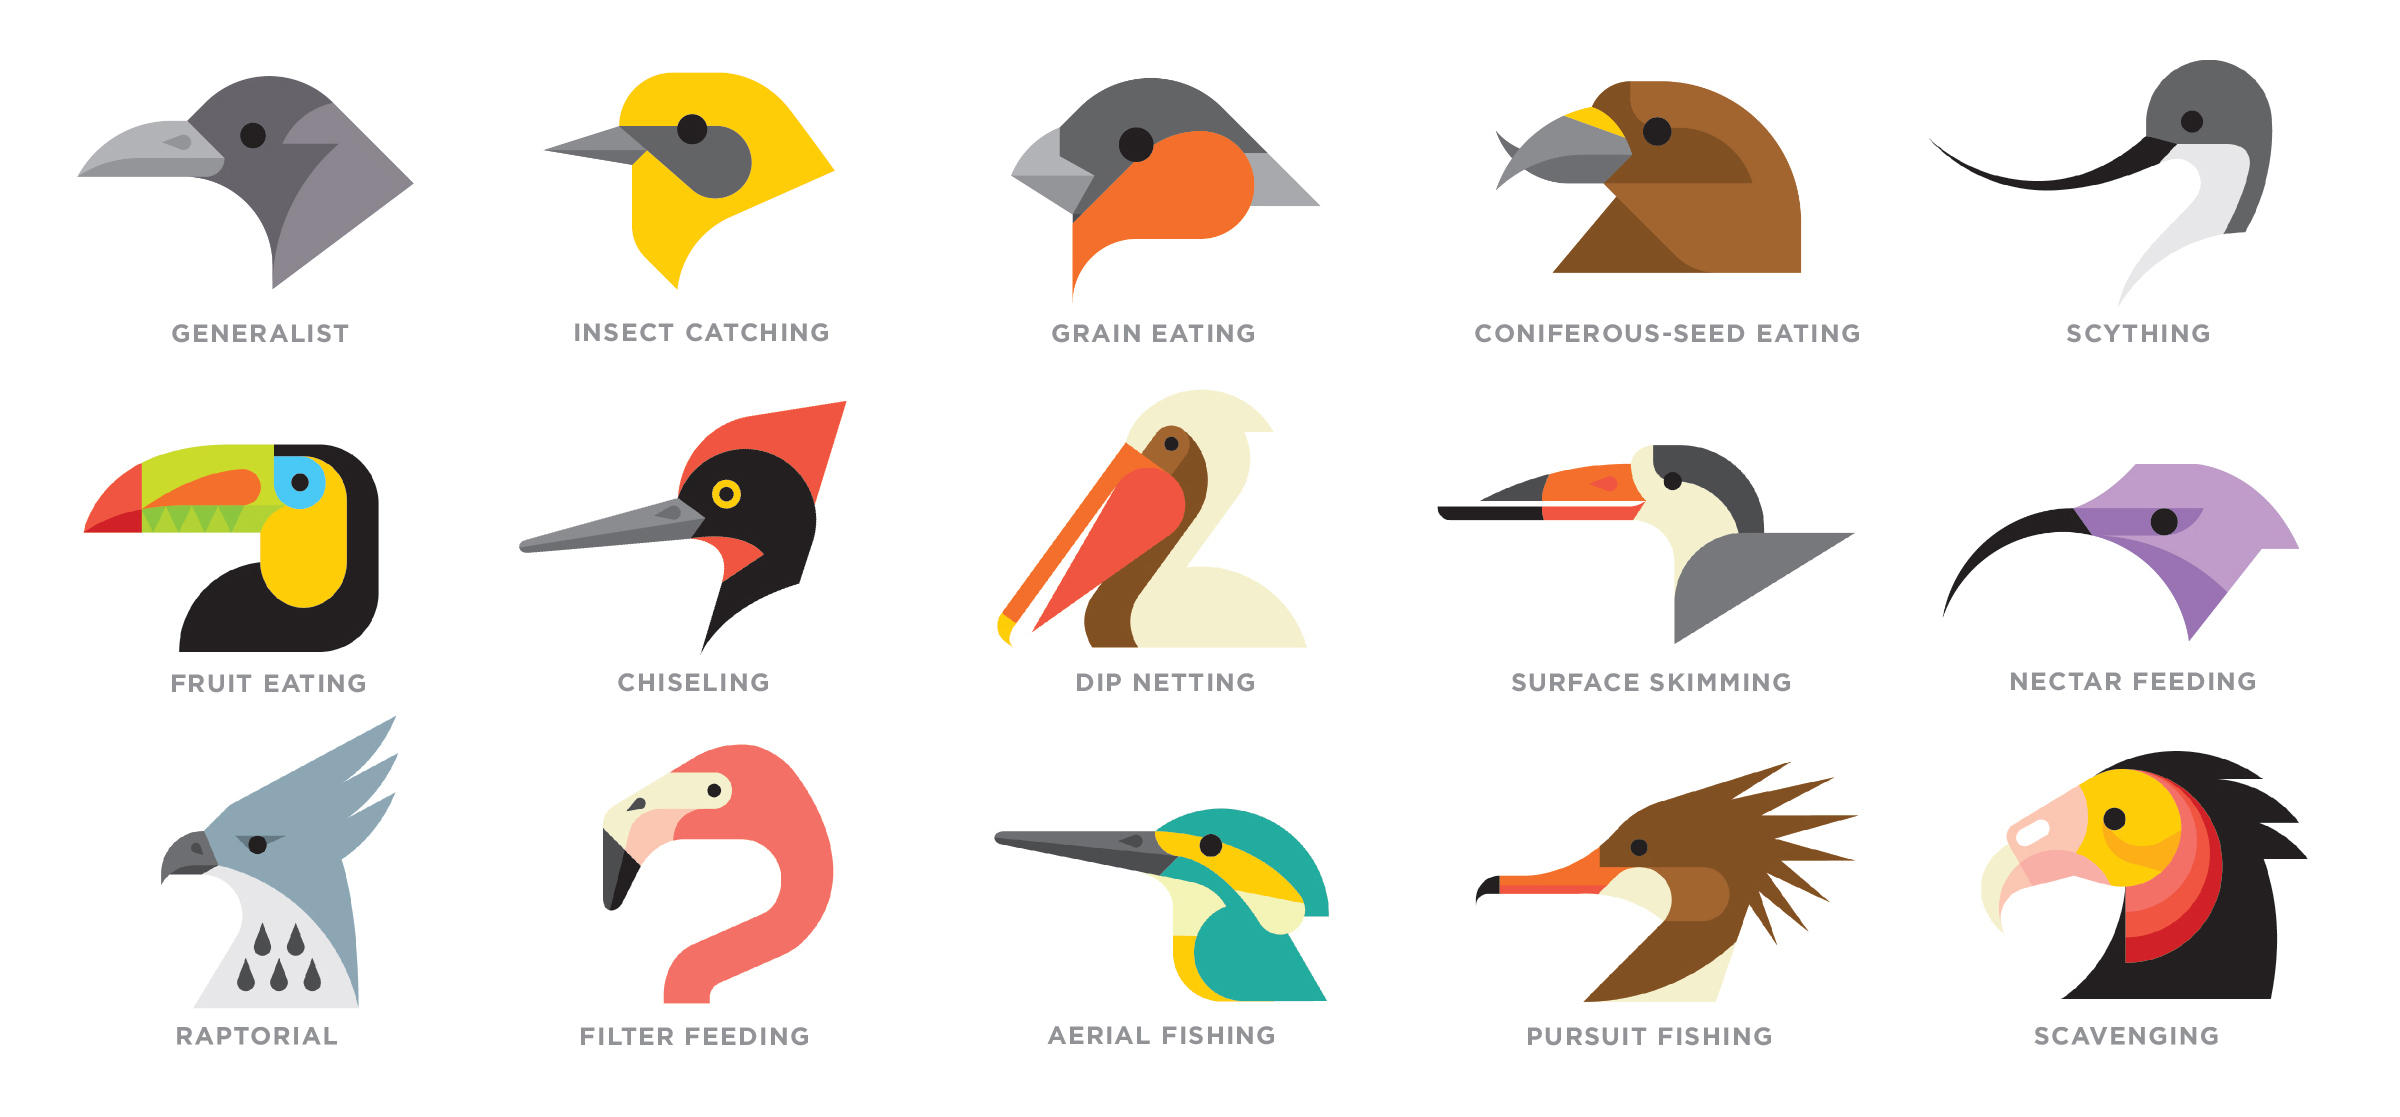 Форма клюва у птиц в зависимости от питания